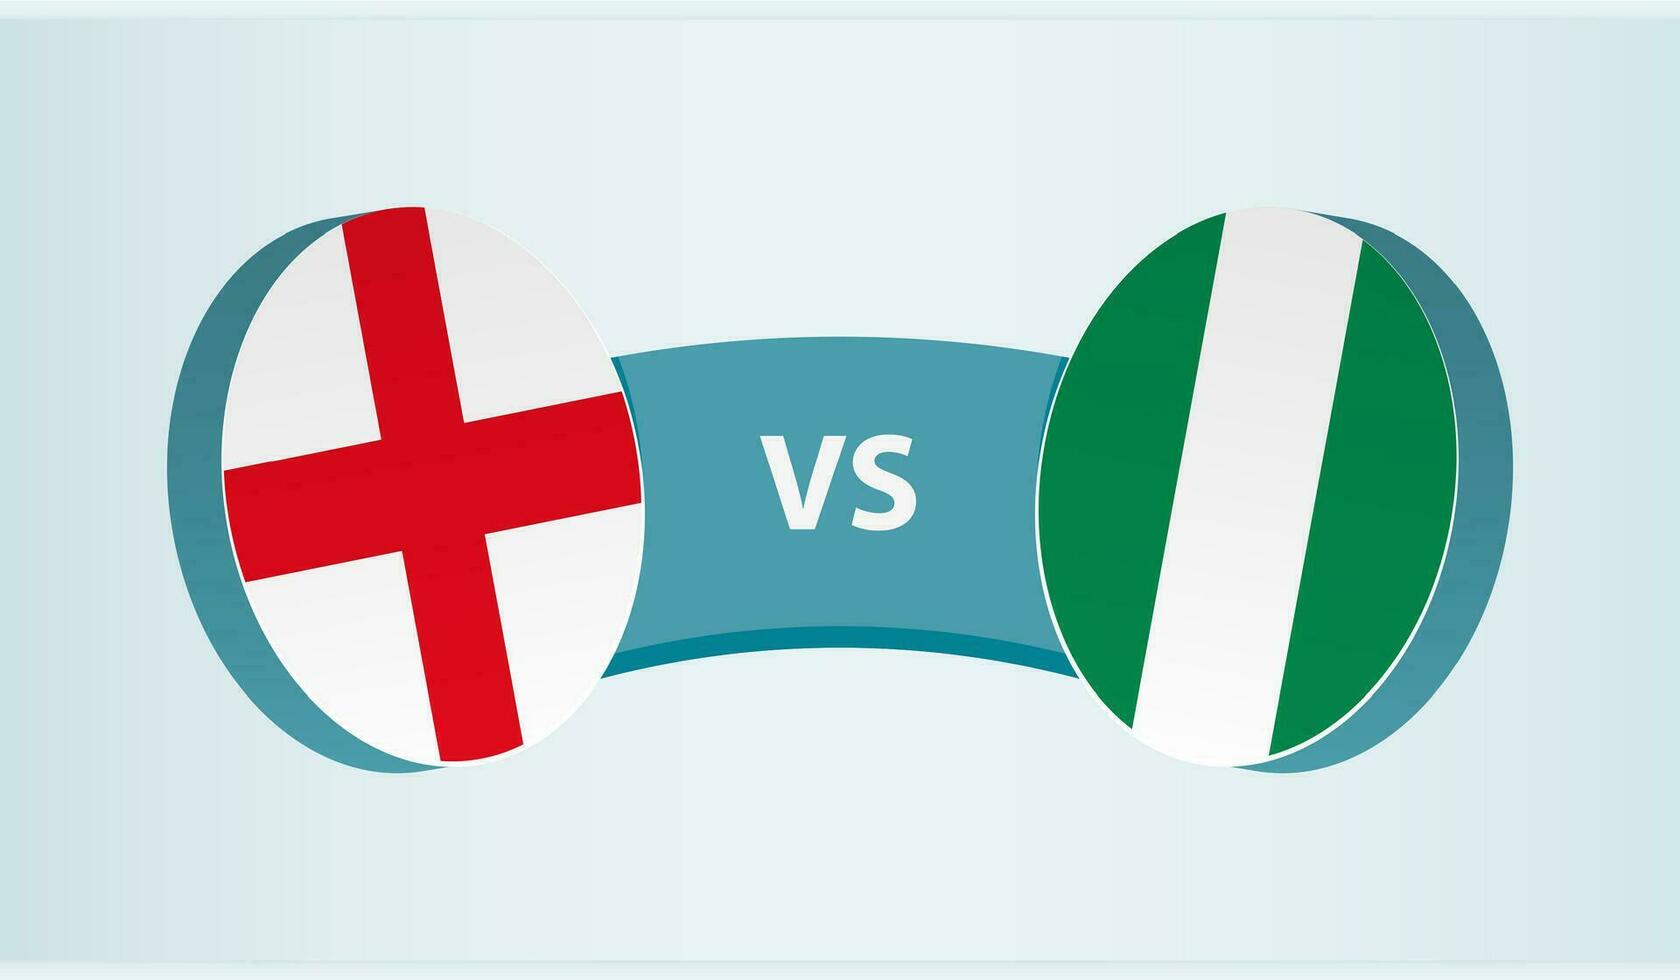 England versus Nigeria, team sports competition concept. vector